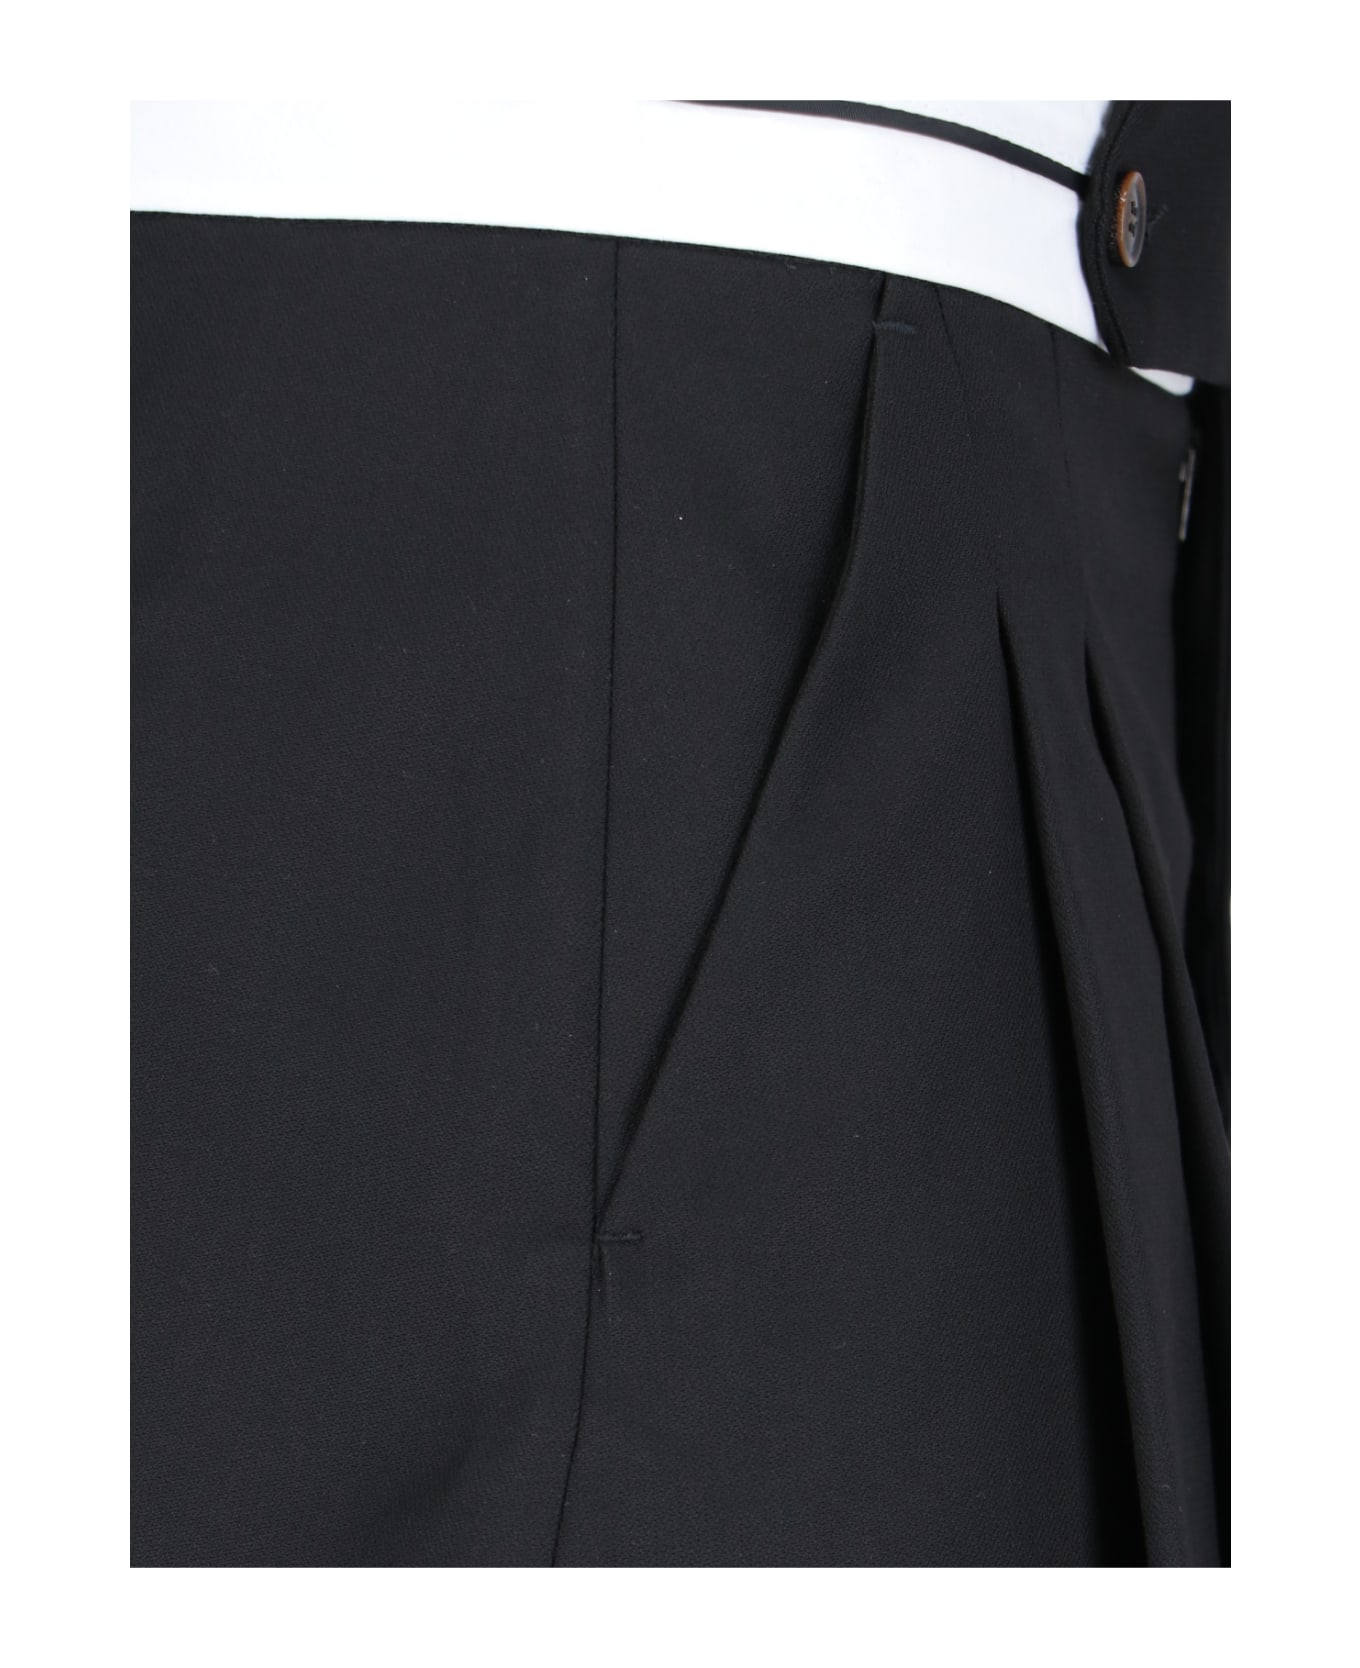 The Garment Mini Skirt "pluto" - Black  